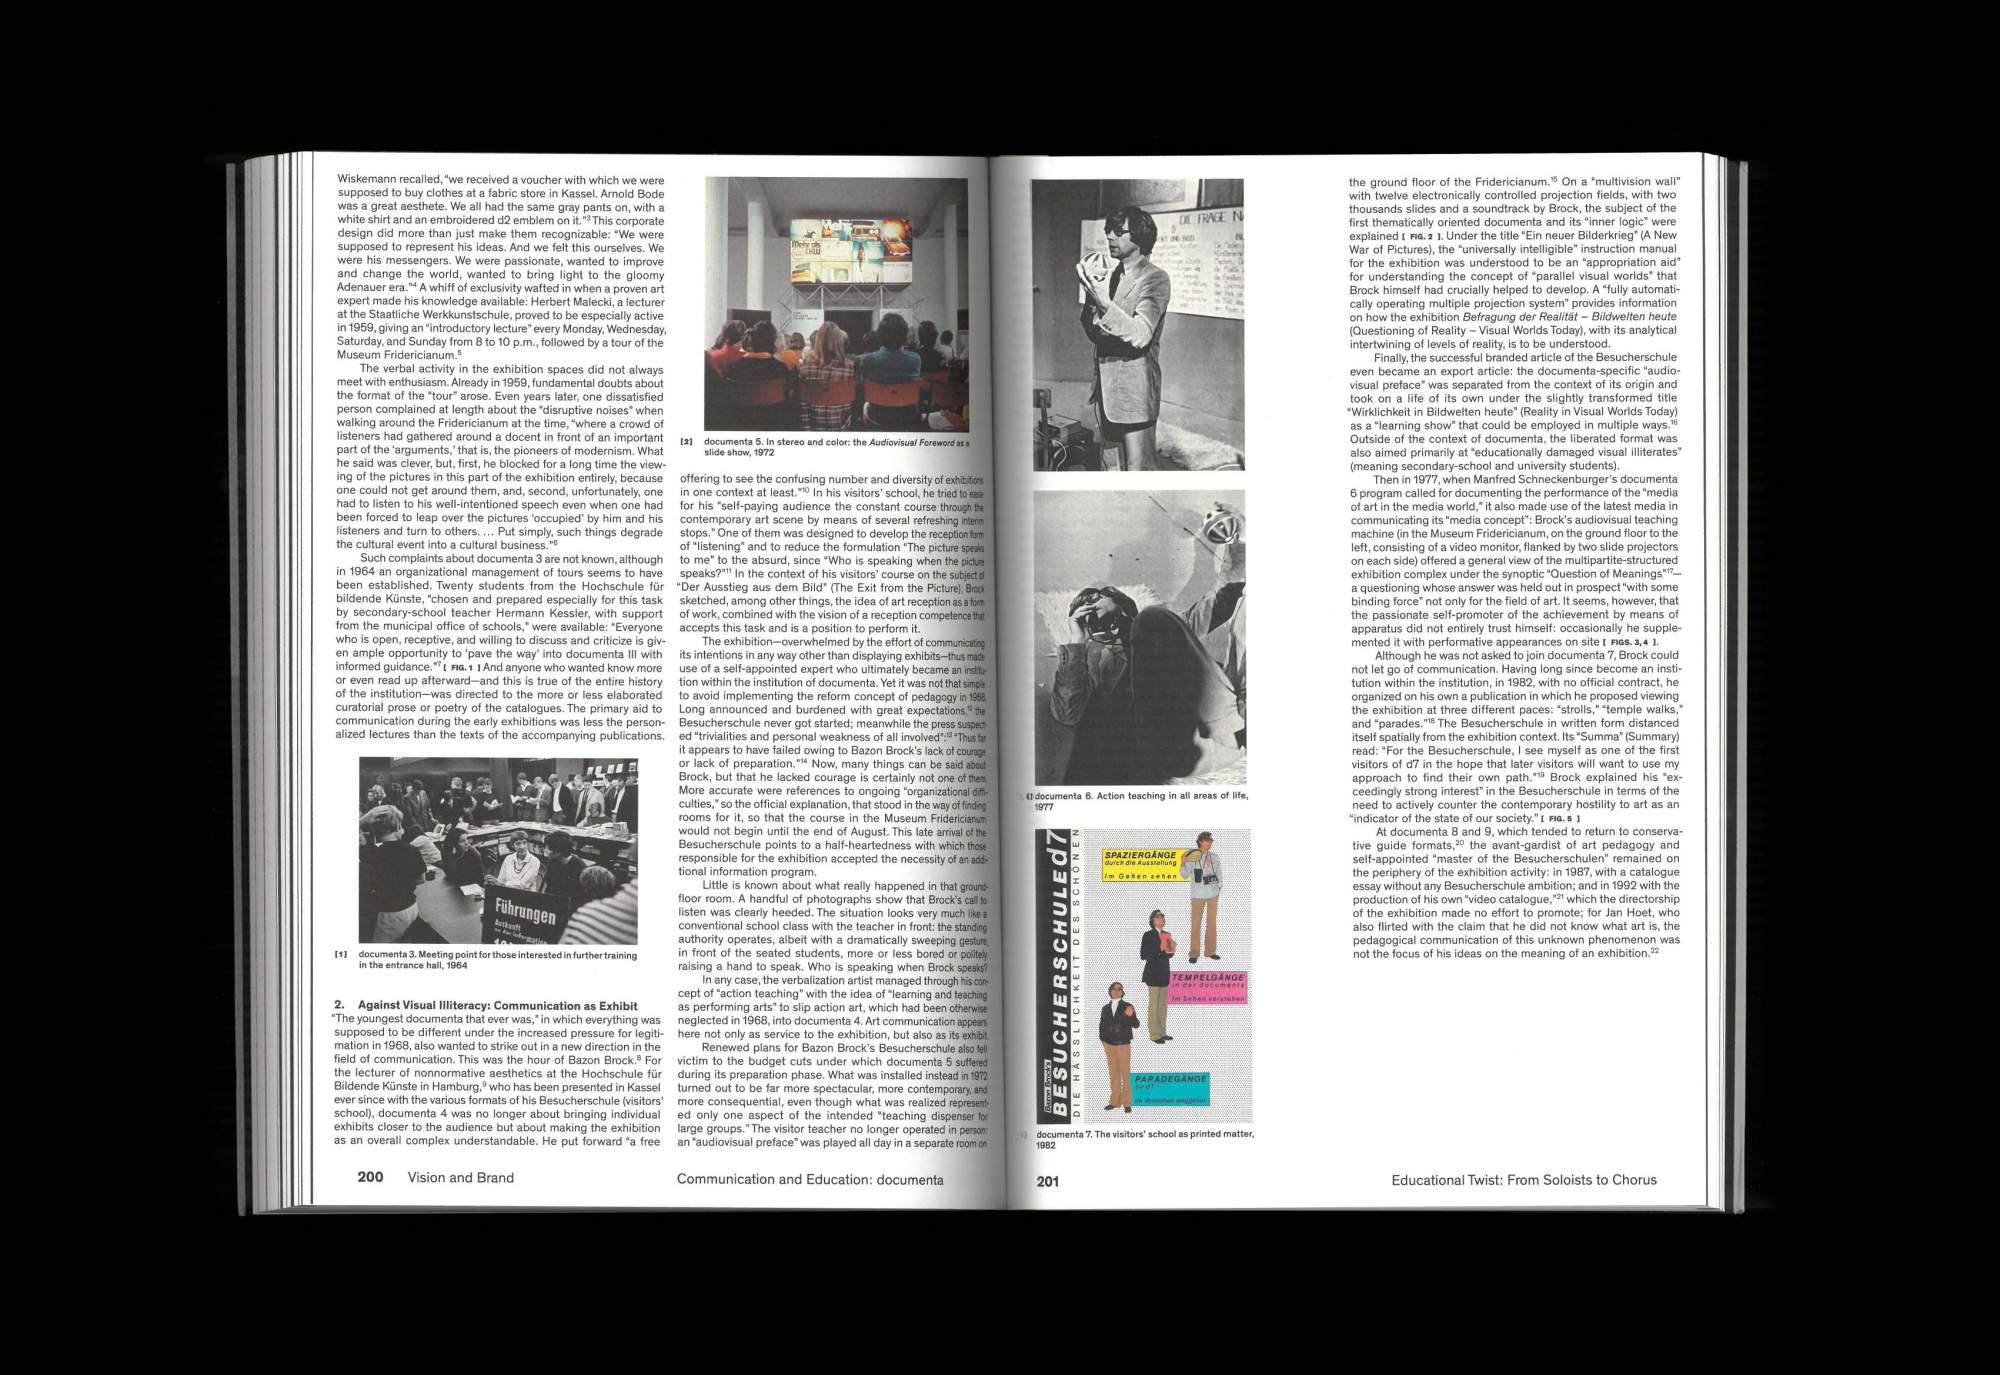 Bauhaus documenta by Birgit Jooss, Wilhelm Ostwald, Daniel Tyradellis